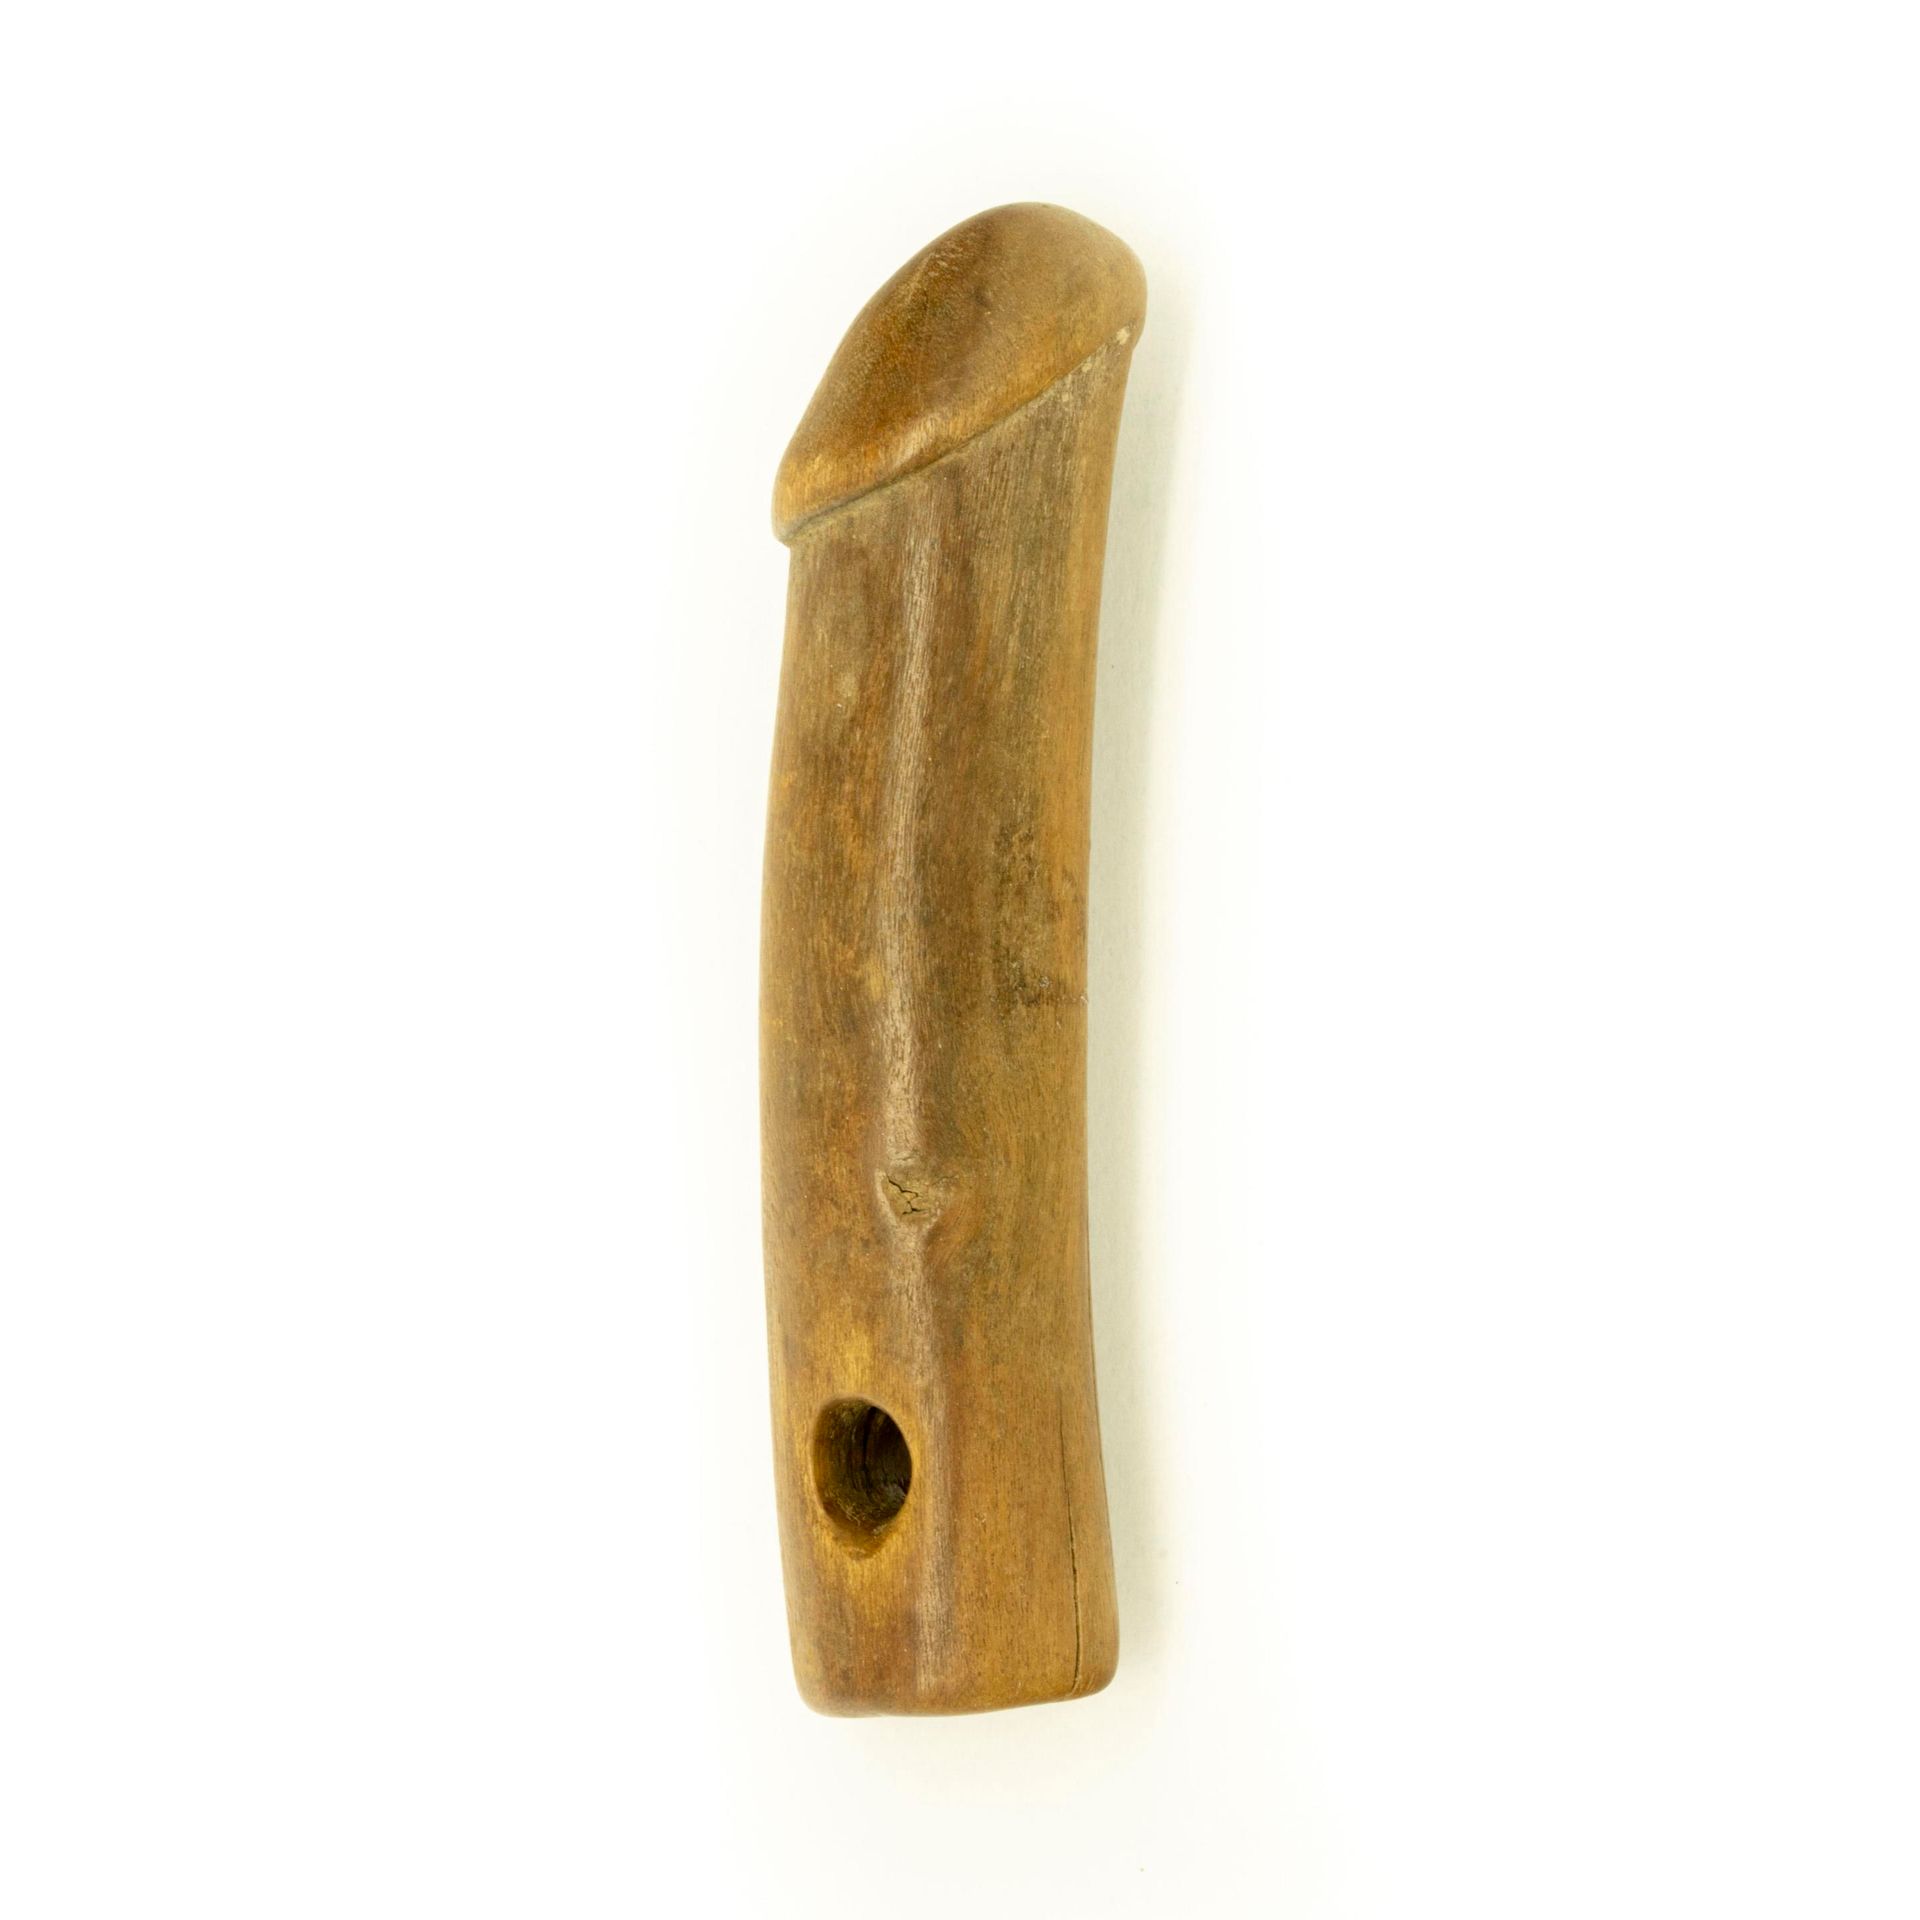 Null 雕刻的木制阴茎或Palad Khik，用于保护和生育。

暹罗北部--19世纪末

L. : 8 cm